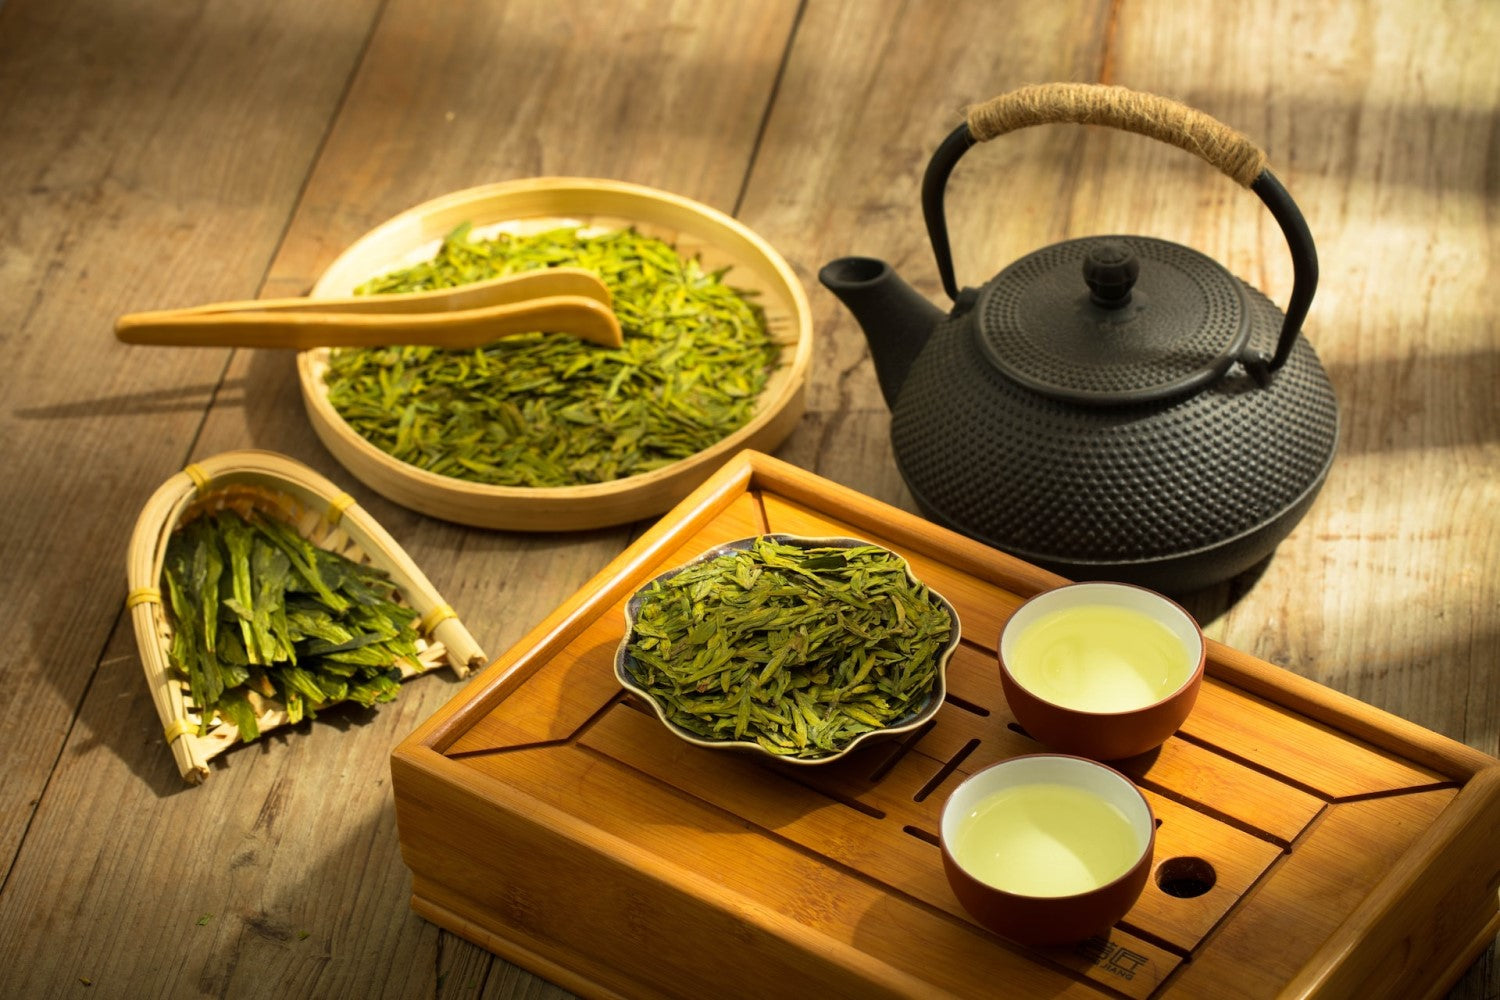 Green tea in a teapot alongside 2 cups with green tea